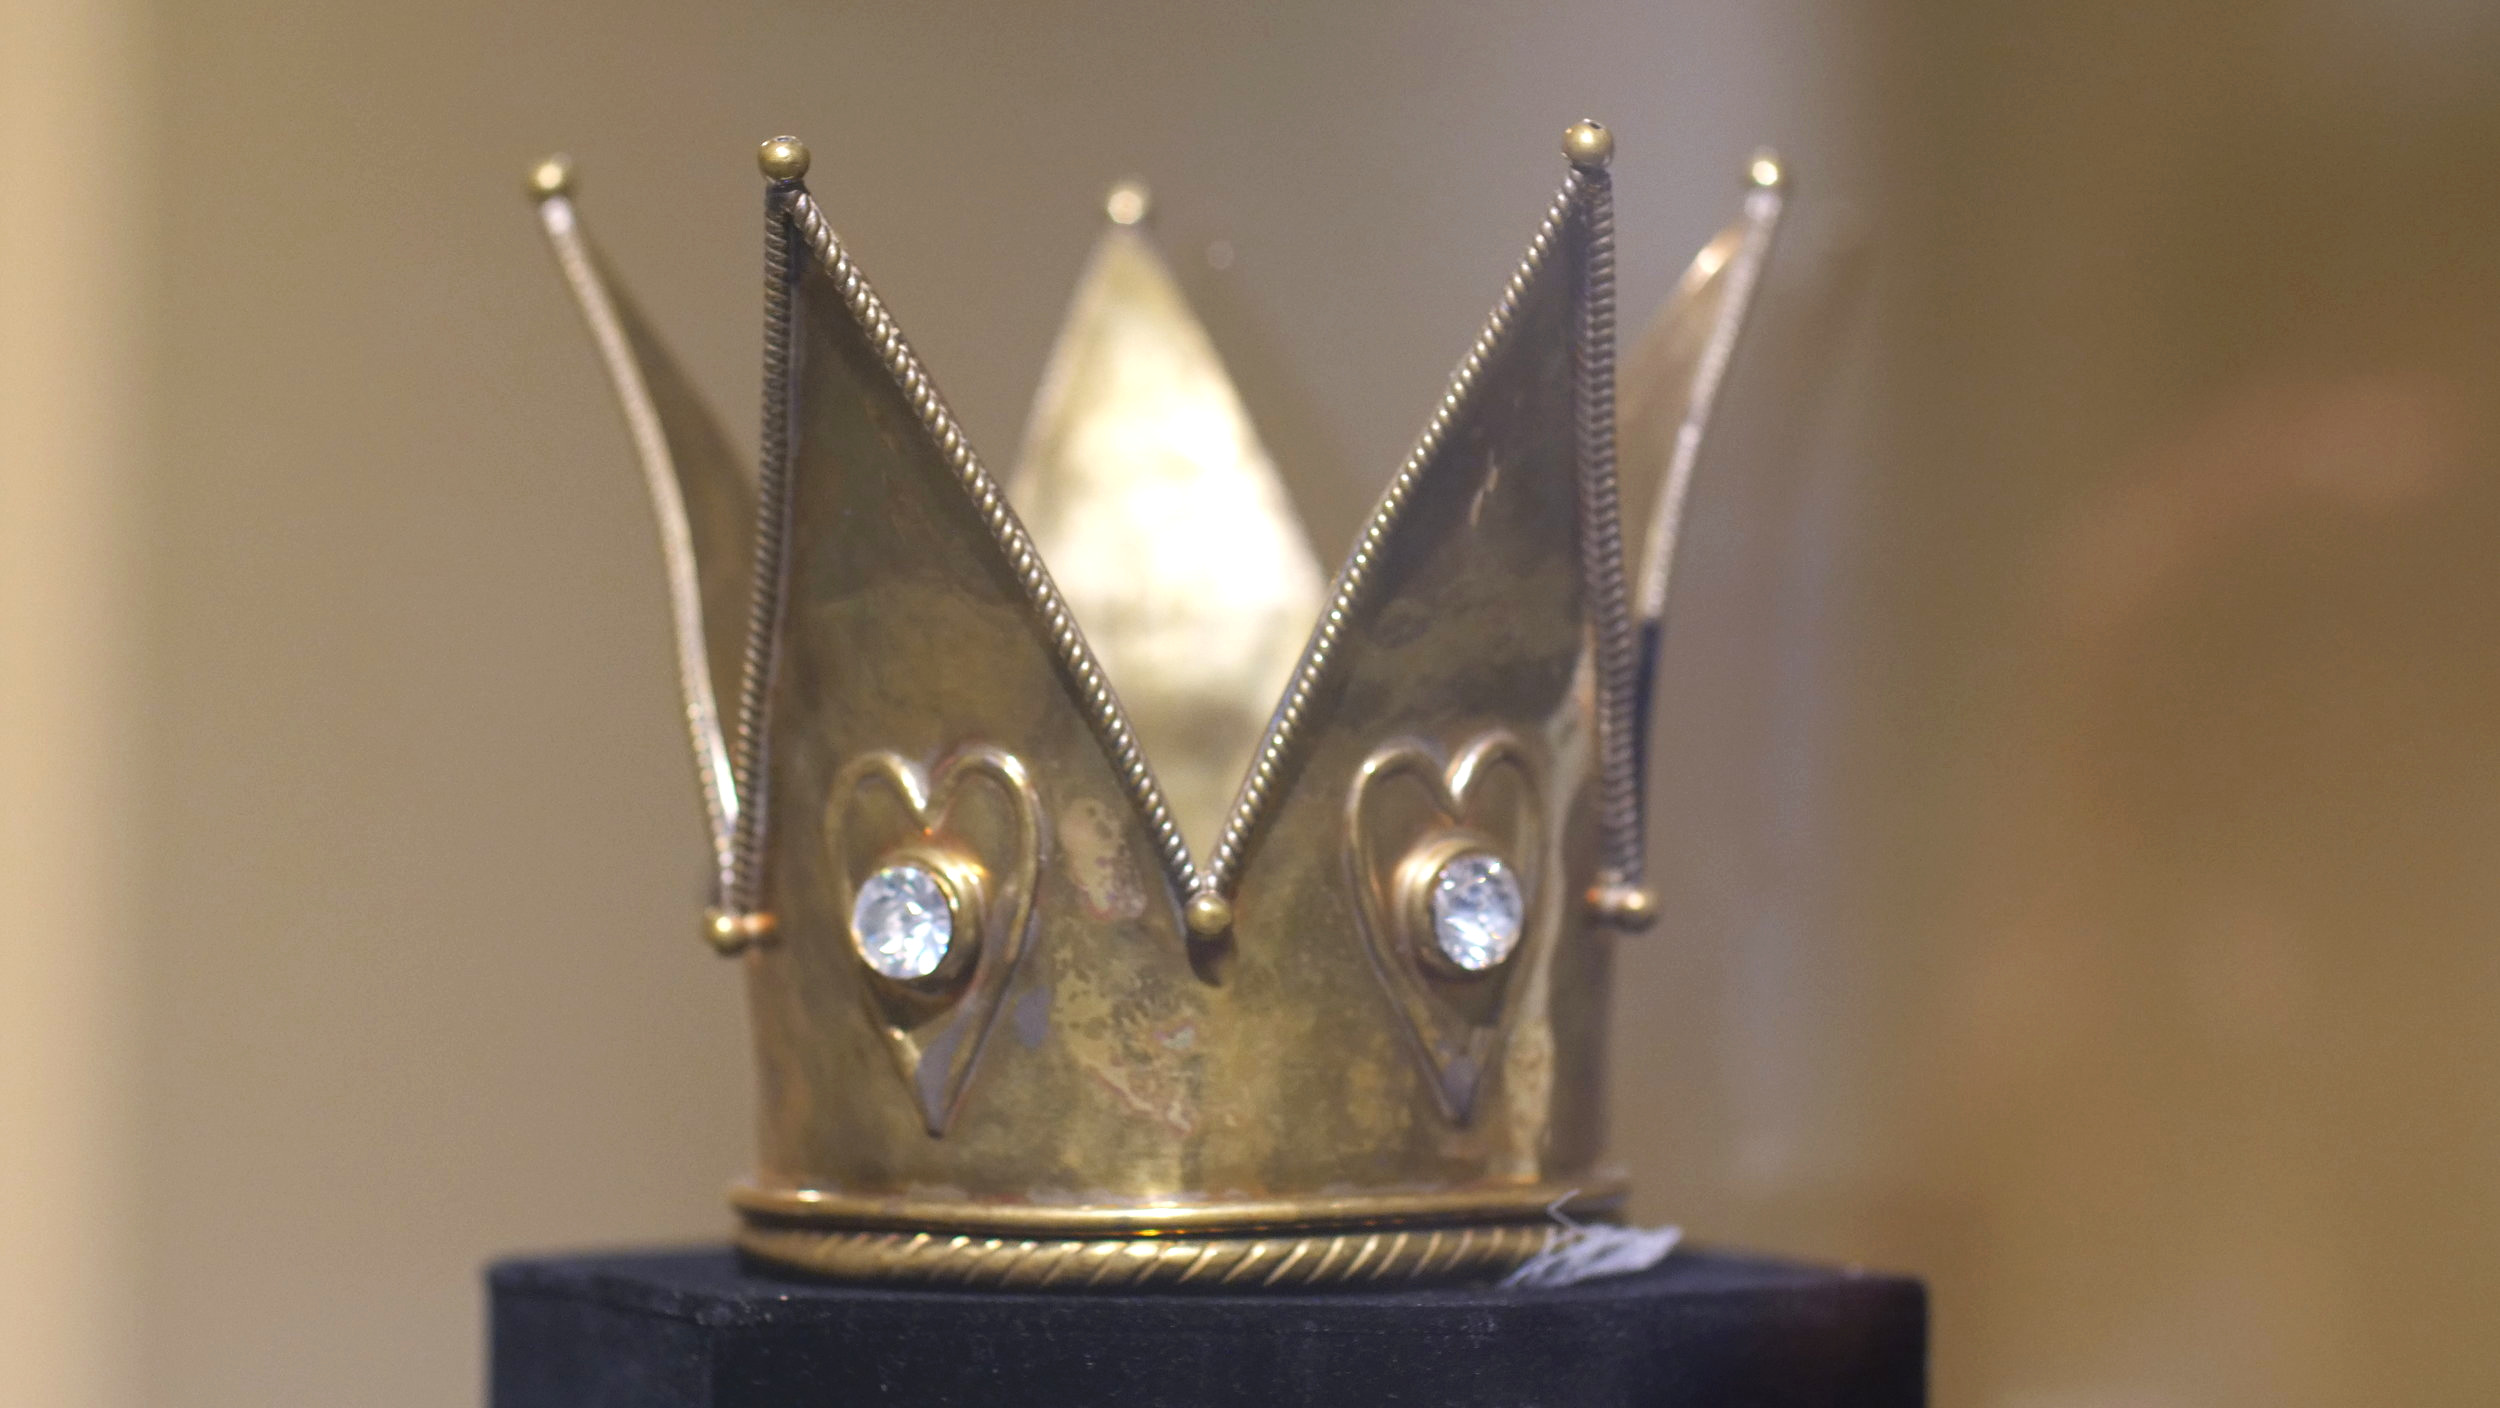 Iracebeth's Crown